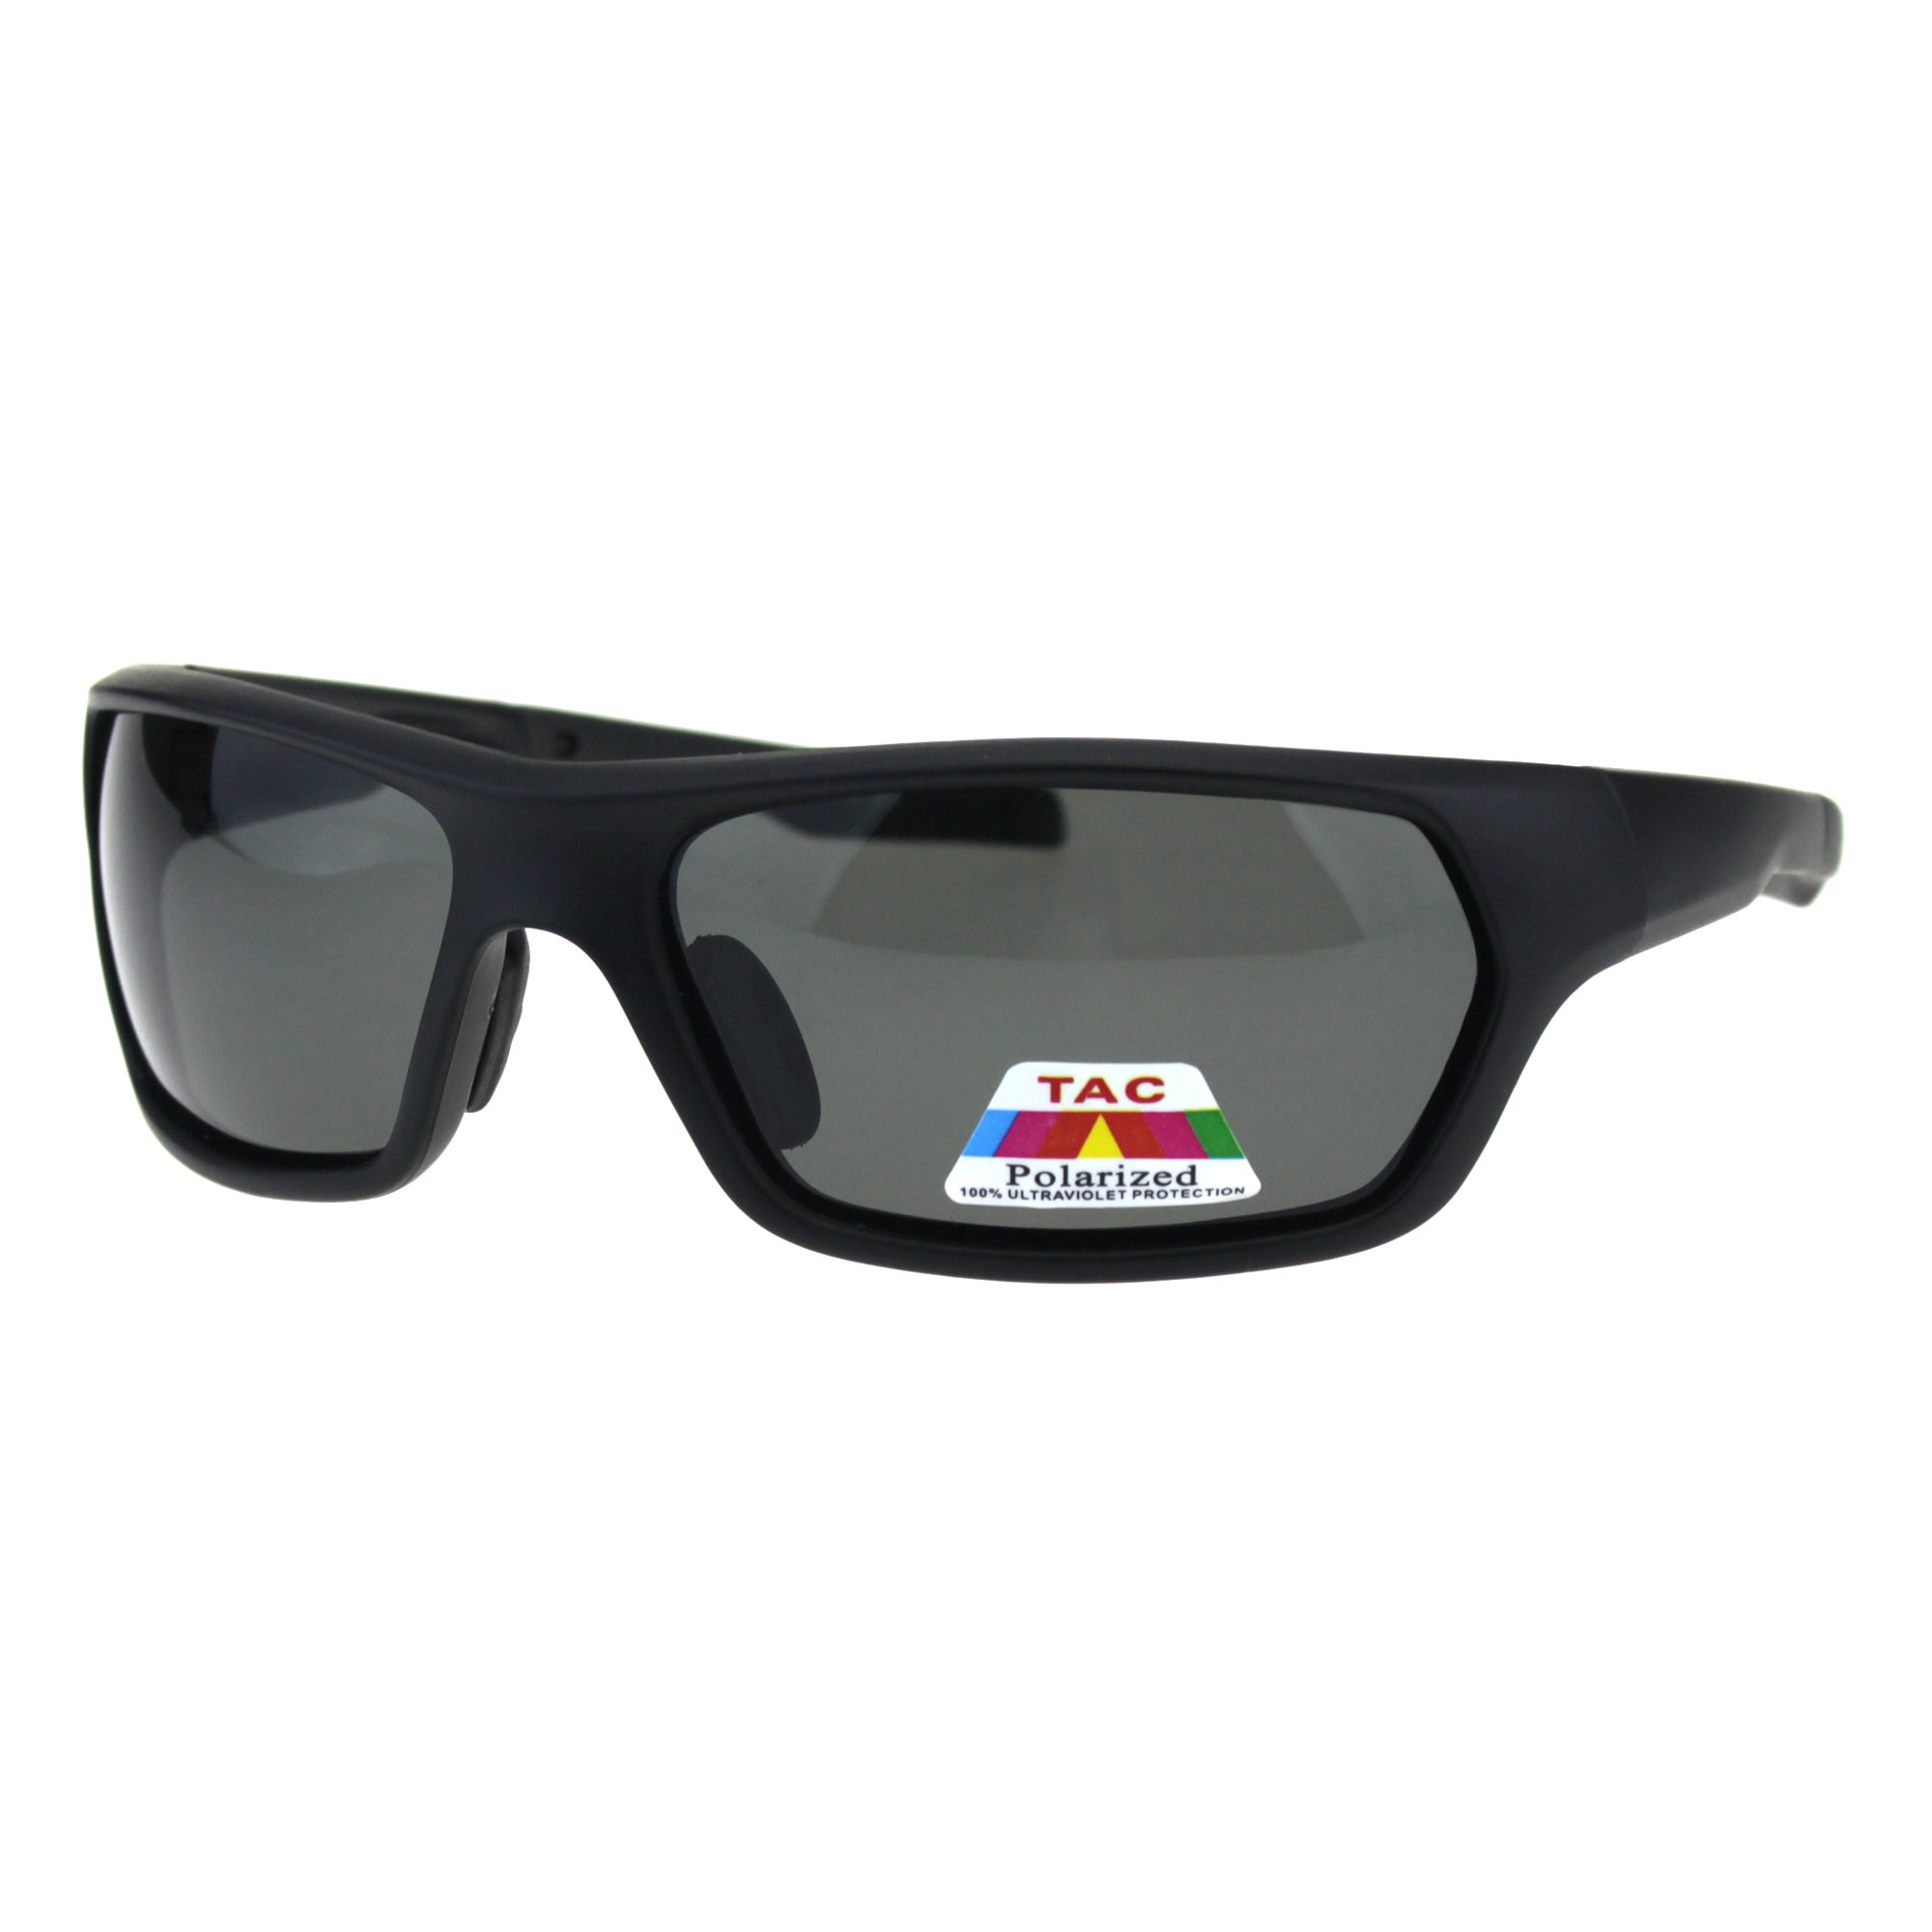 Polarized No Glare Warp Plastic Sport Light Weight Mens Sunglasses Matte Black - image 1 of 3